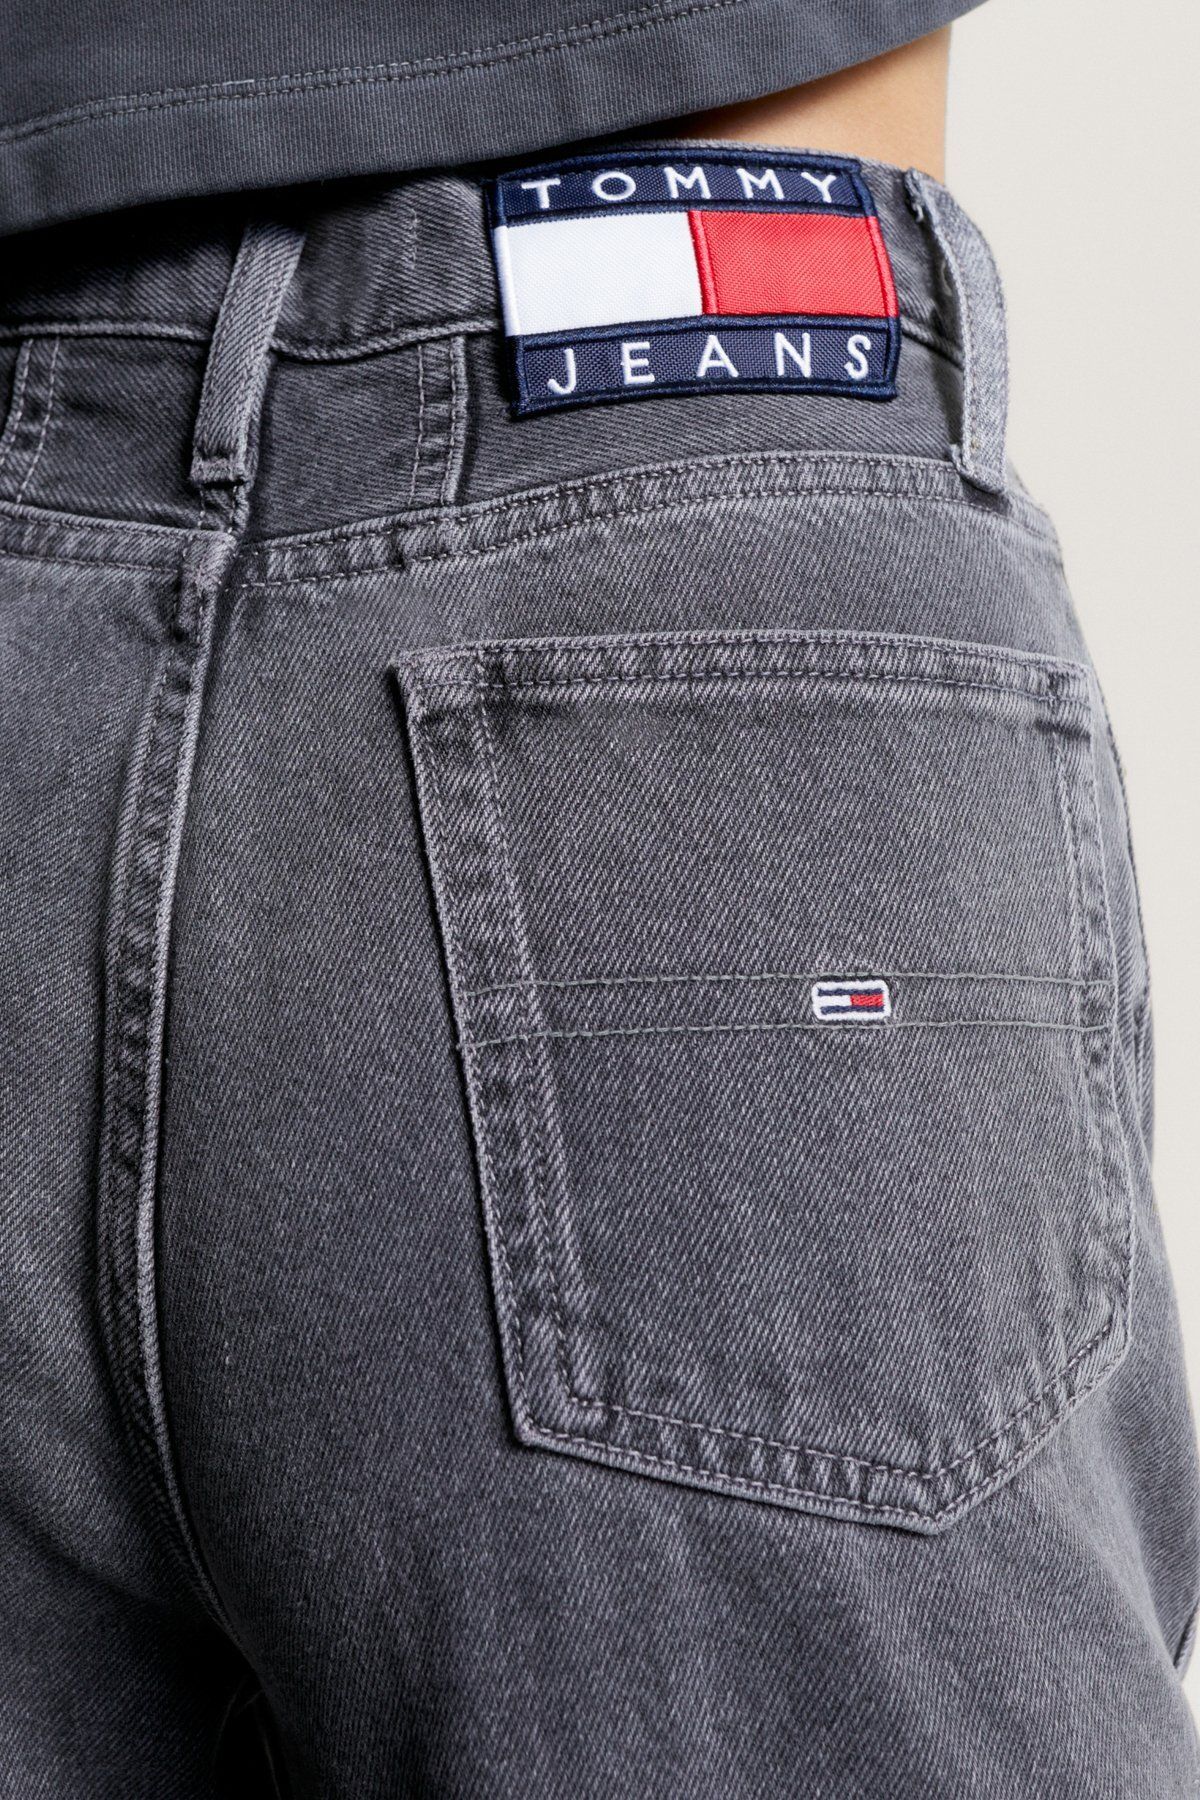 Tommy Jeans Kadın Gri Jean ( Model Kodu : DW0DW16647 )